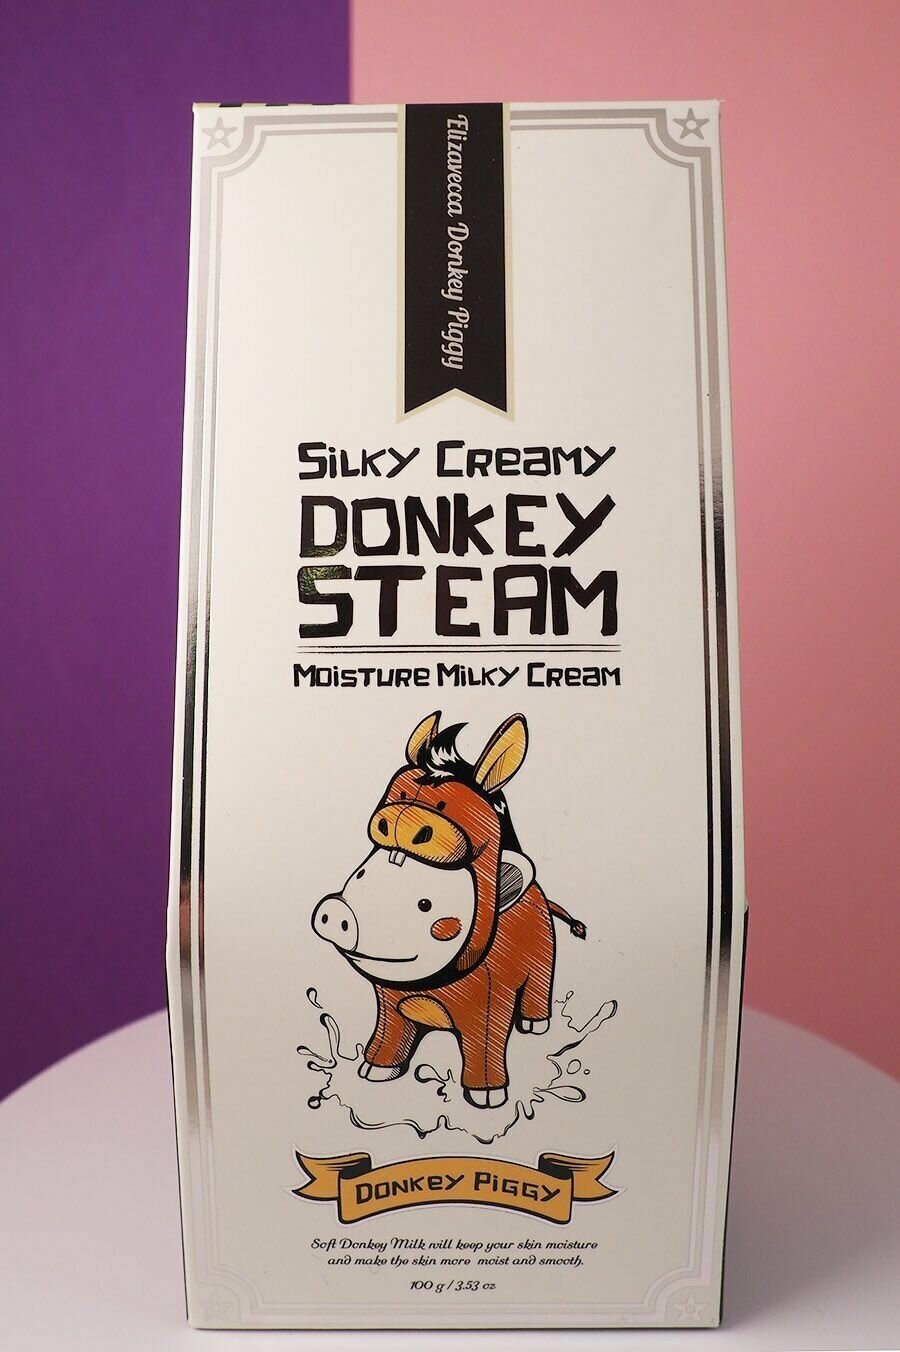 Silky creamy donkey steam moisture milky cream крем фото 44